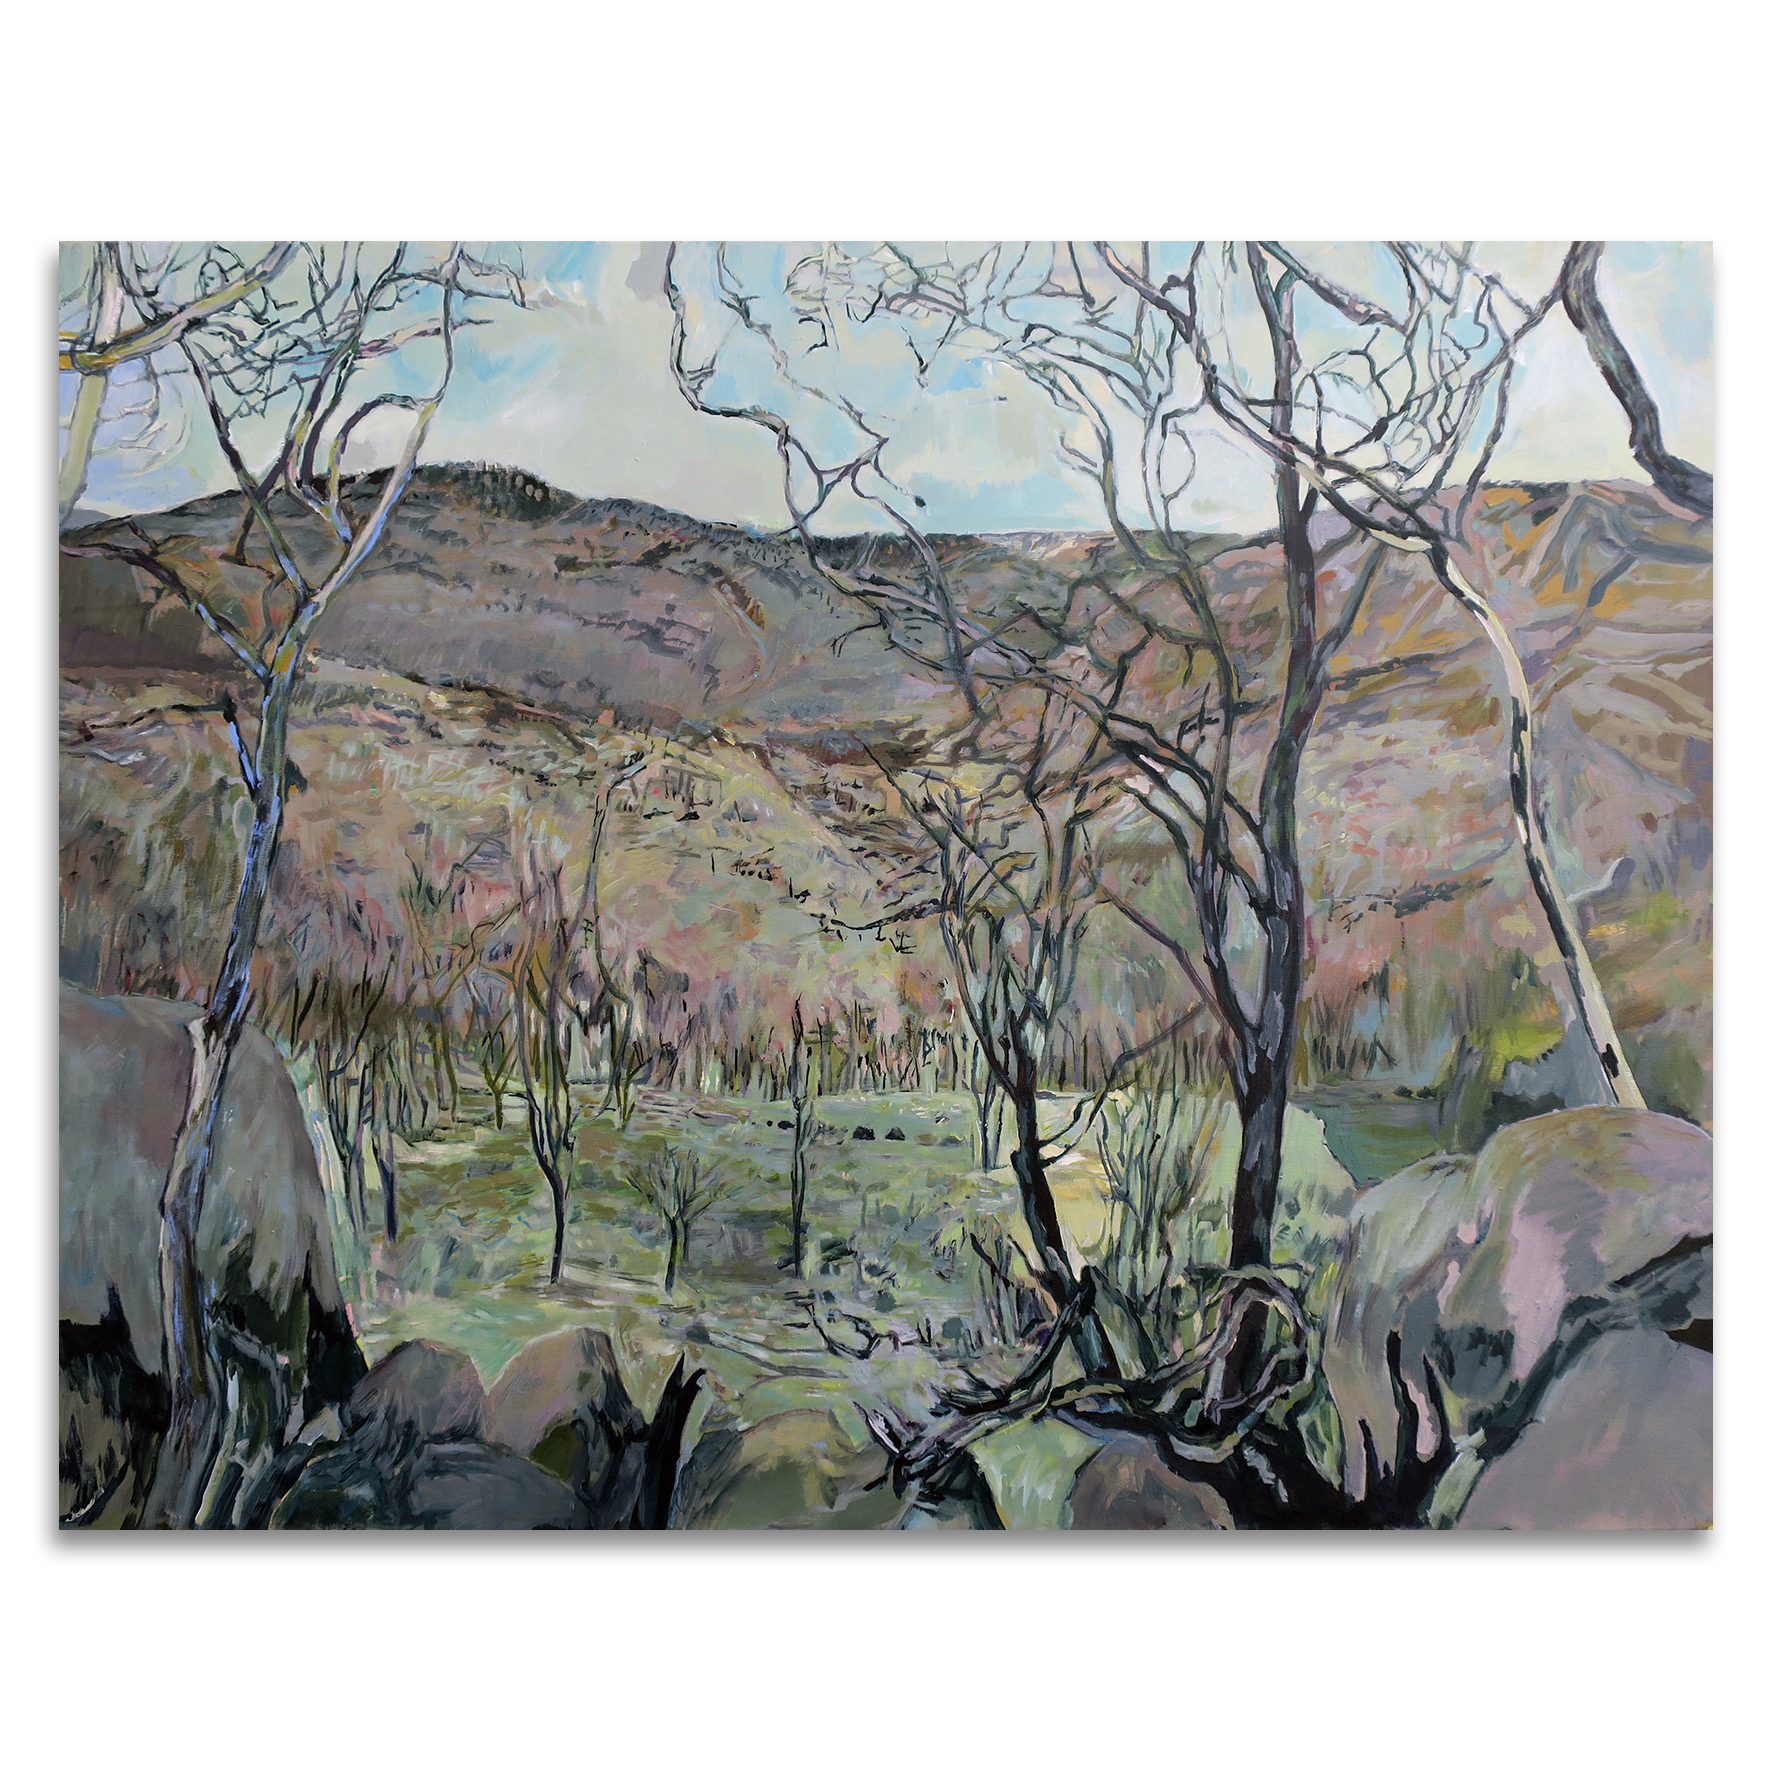 Kerry Johns: 'Land Enduring, Namadji. Finalist 2022 Goulburn Art Award, Artsite Contemporary, Australia.